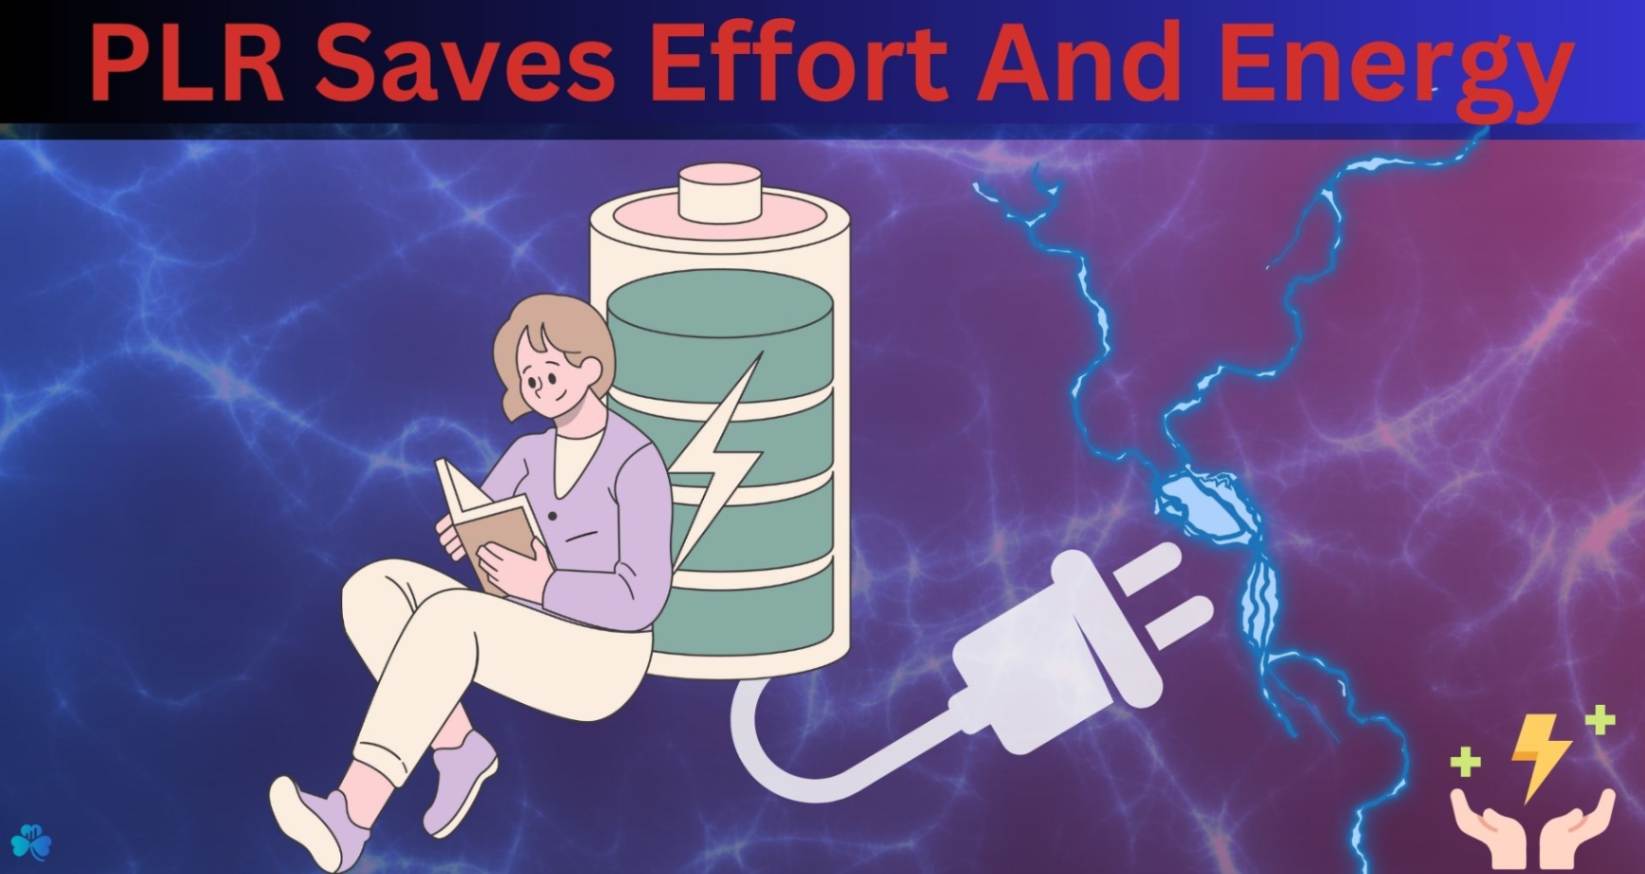 PLR Saves effort and energy